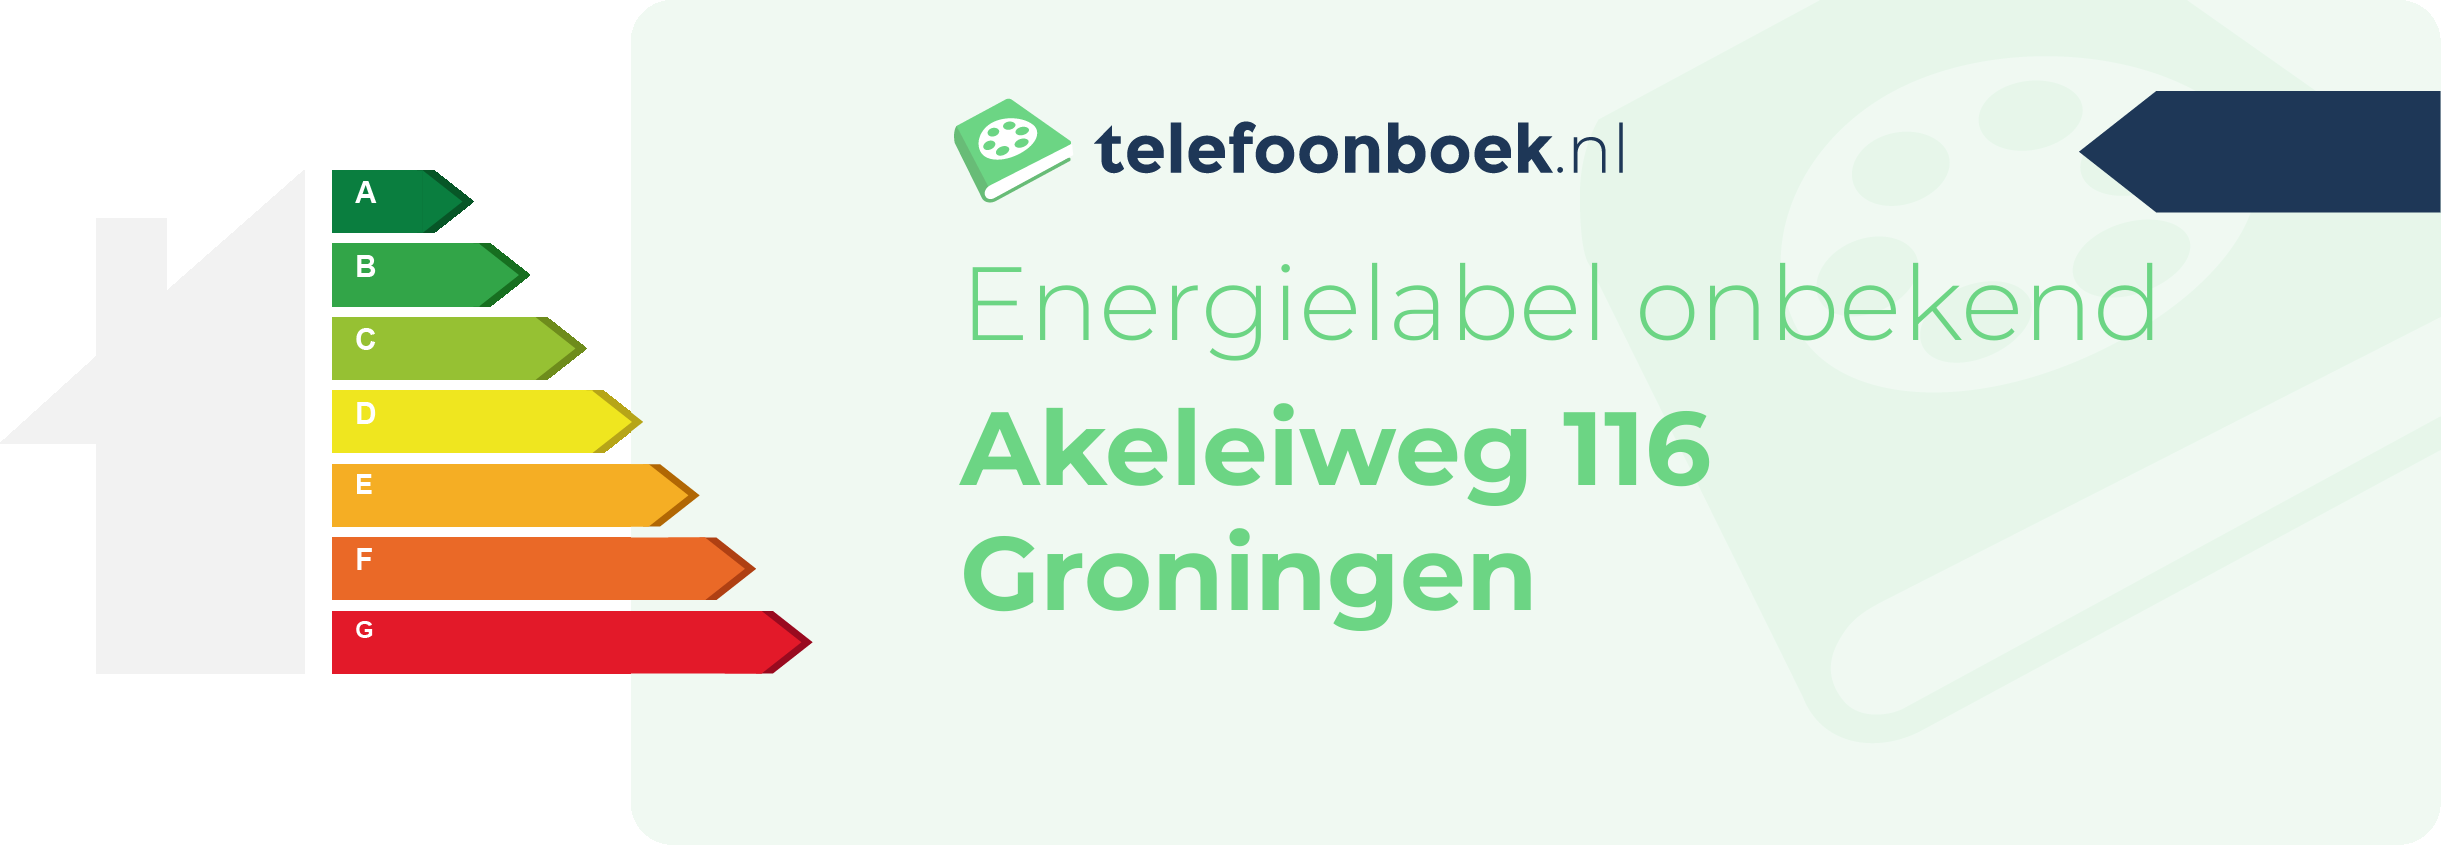 Energielabel Akeleiweg 116 Groningen